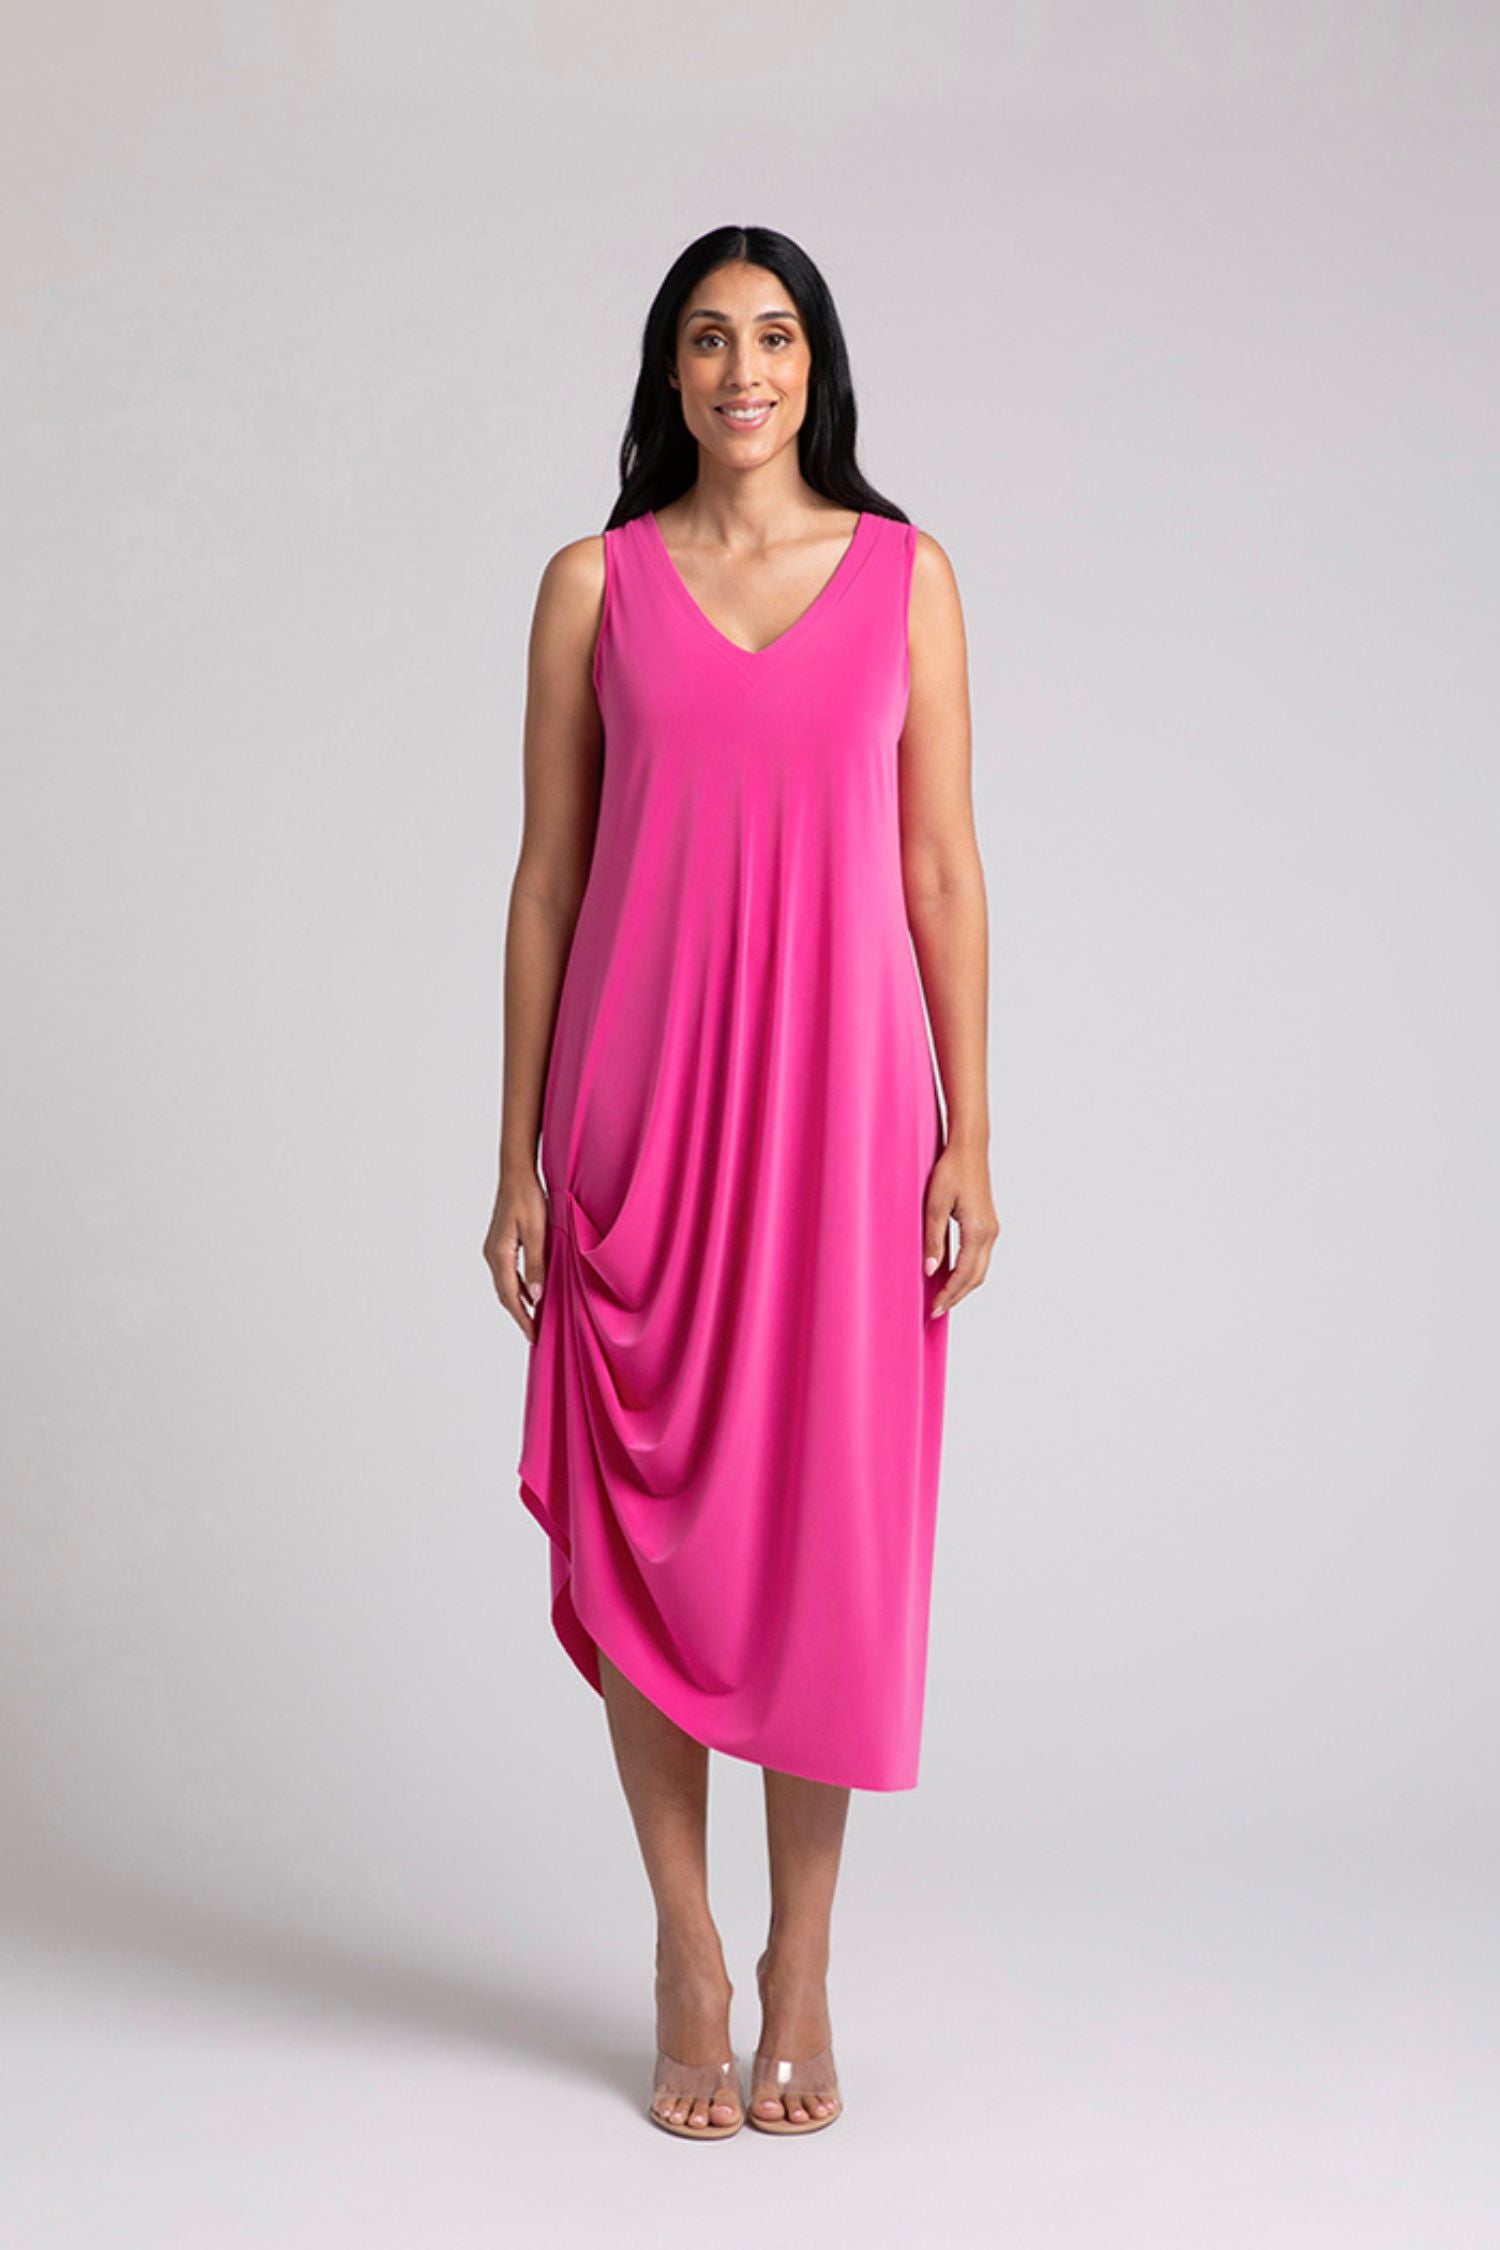 Sympli Sleeveless Drama Dress - Style 28168, front, peony